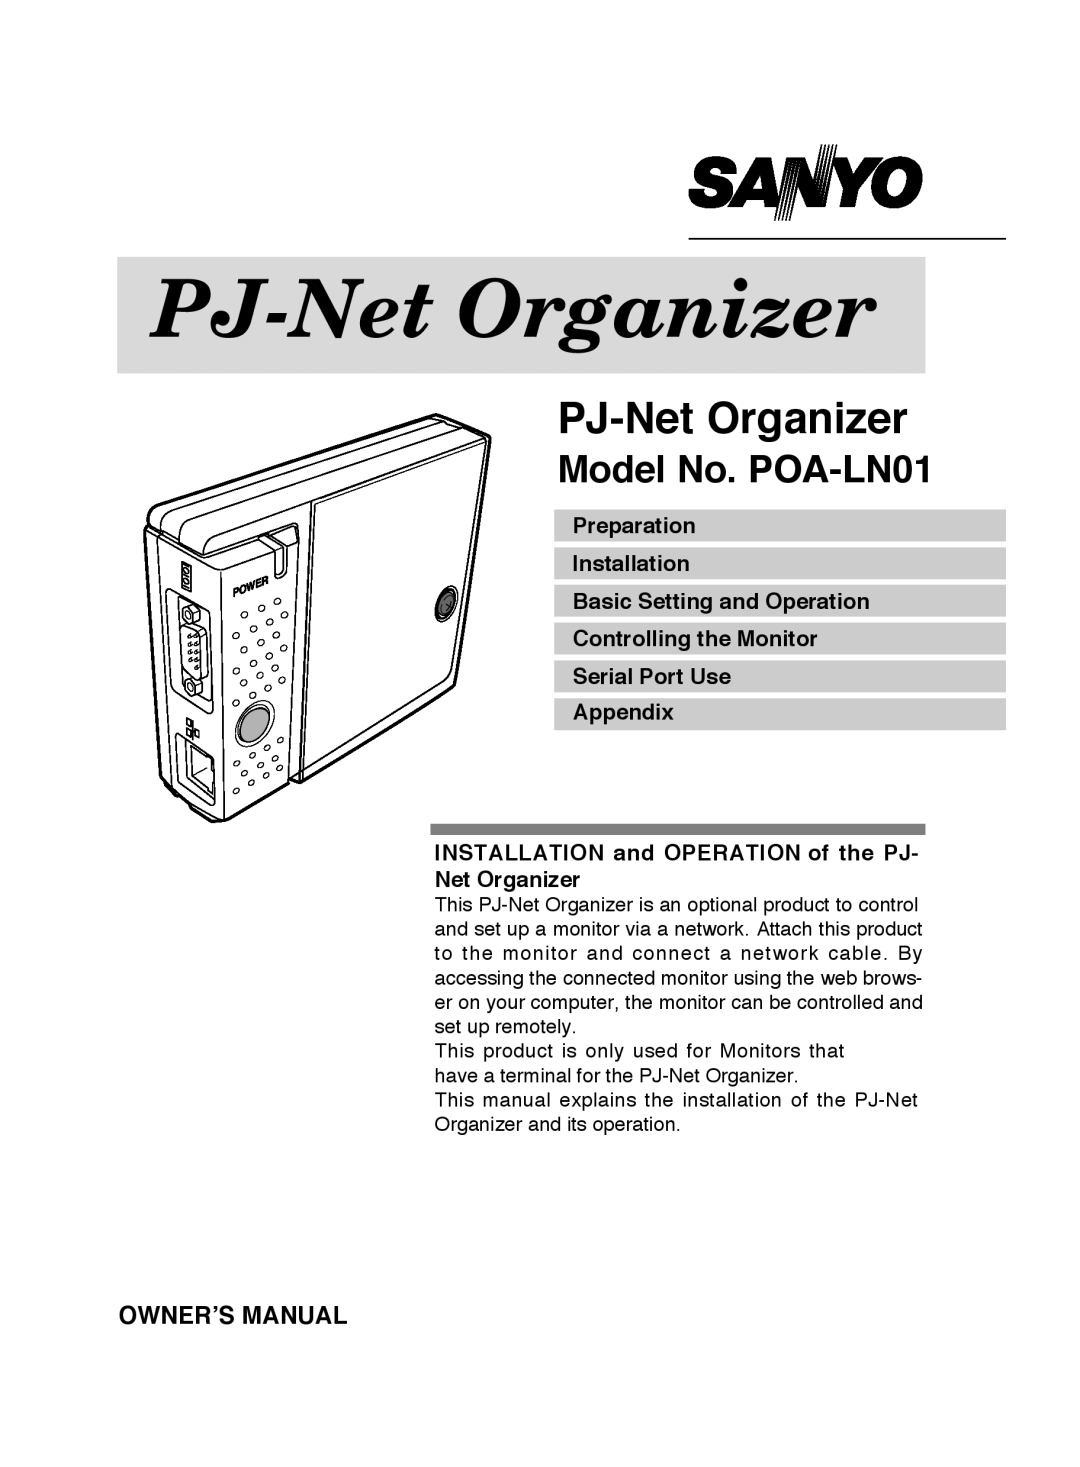 Sanyo appendix PJ-Net Organizer, Model No. POA-LN01, Ownerʼs Manual, Controlling the Monitor Serial Port Use Appendix 